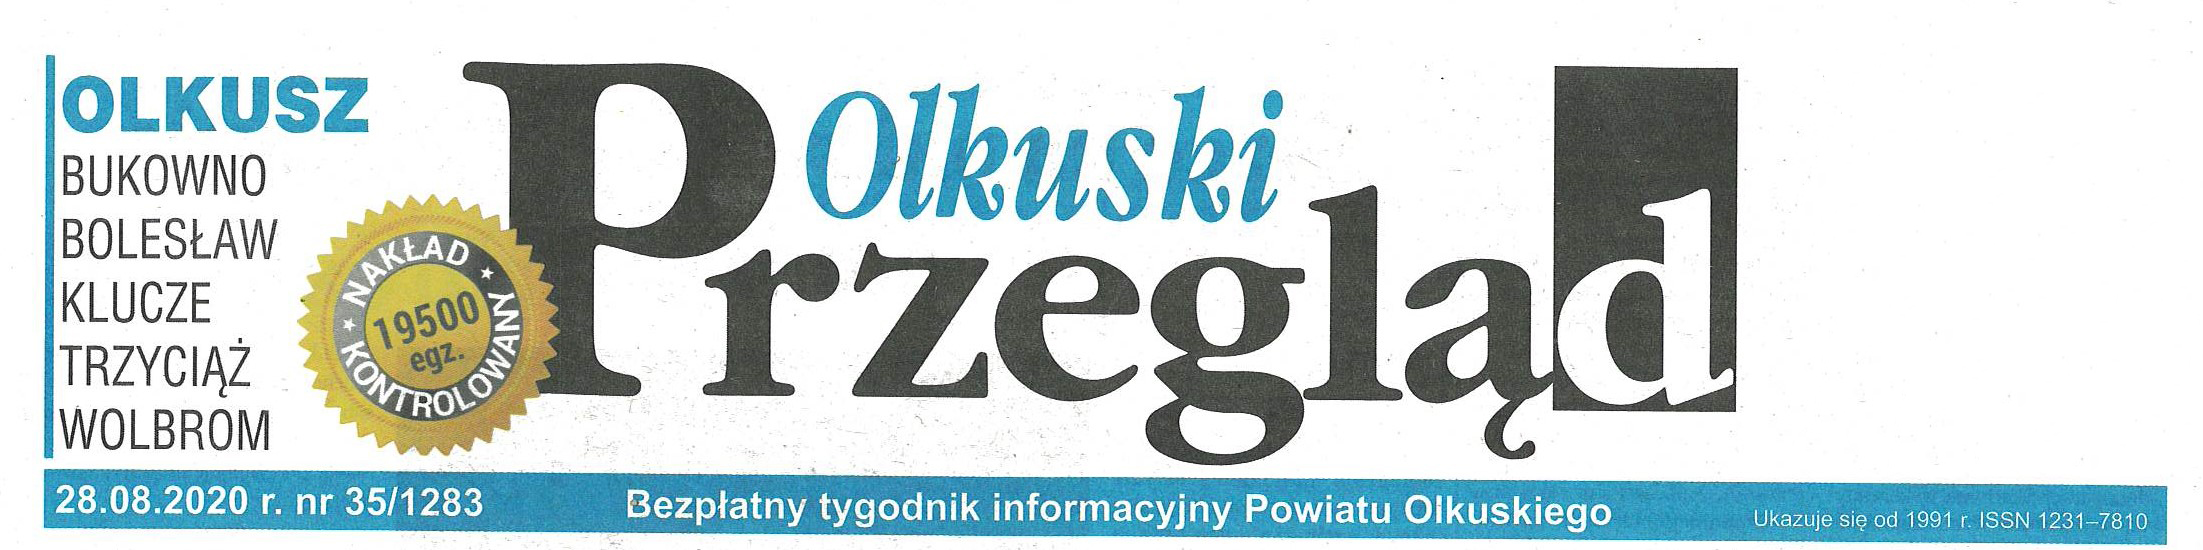 printalertsu.krakow.pl 20200902 101231